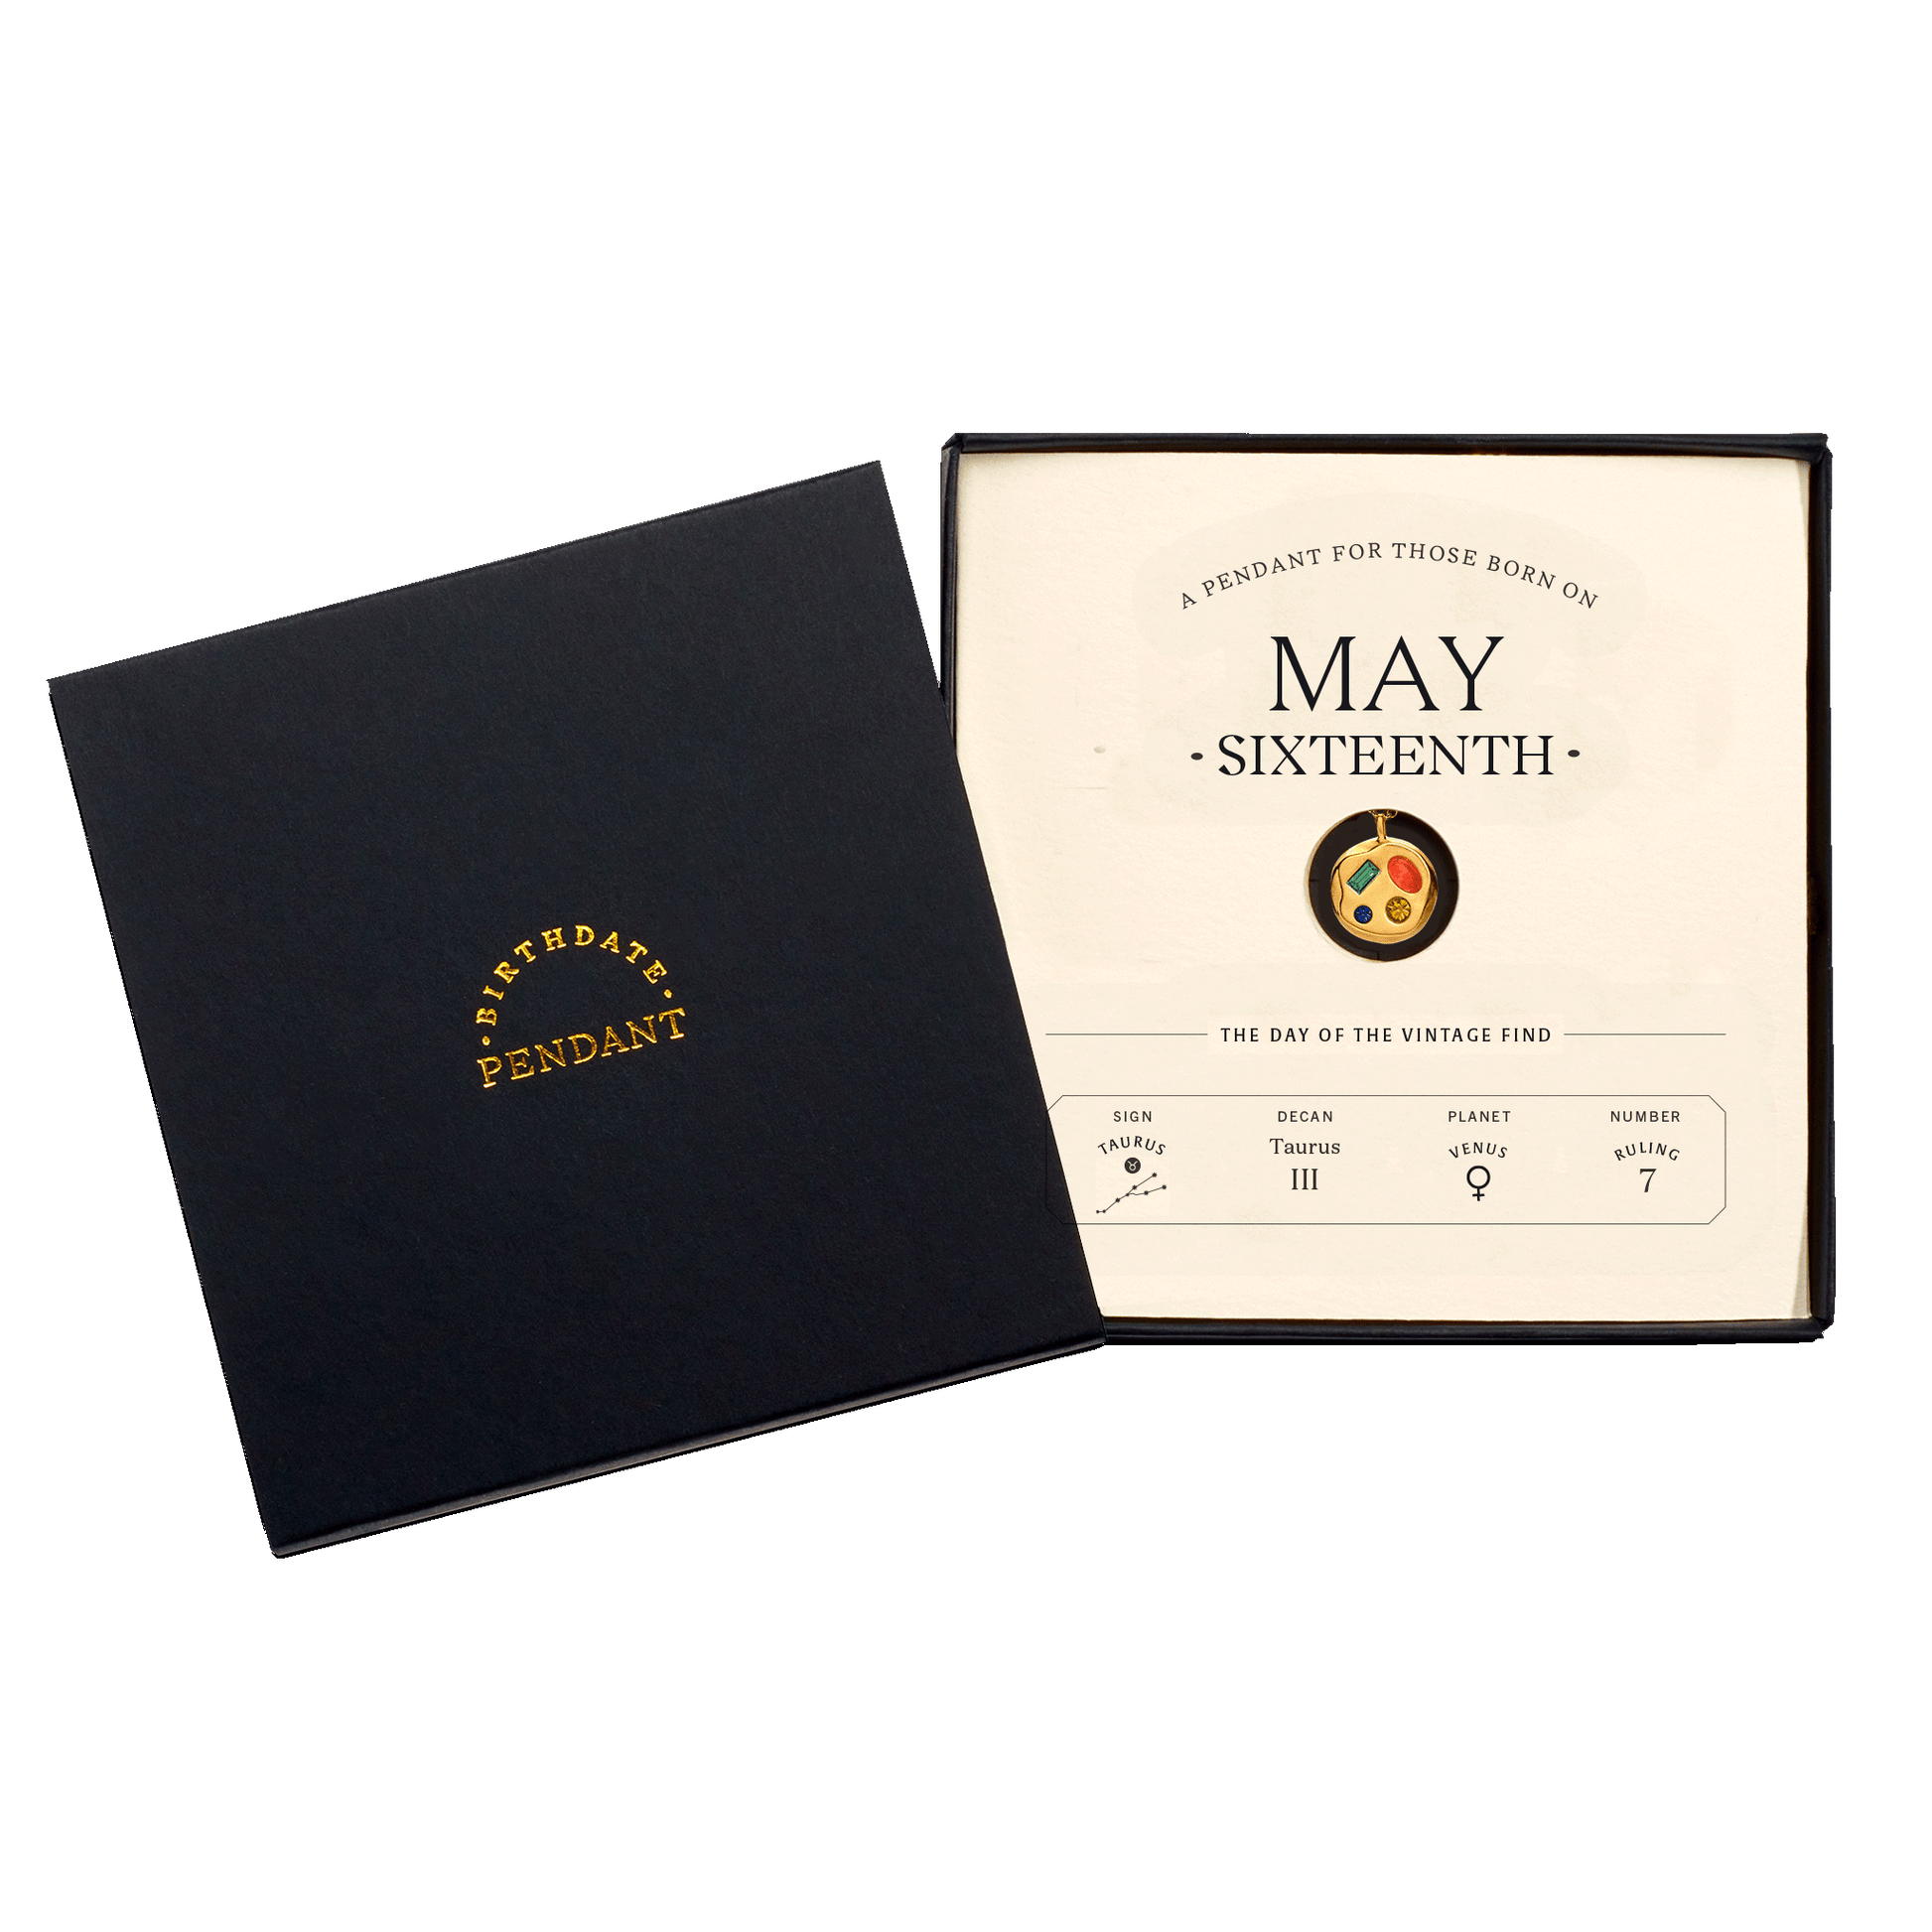 The May Sixteenth Pendant inside its box